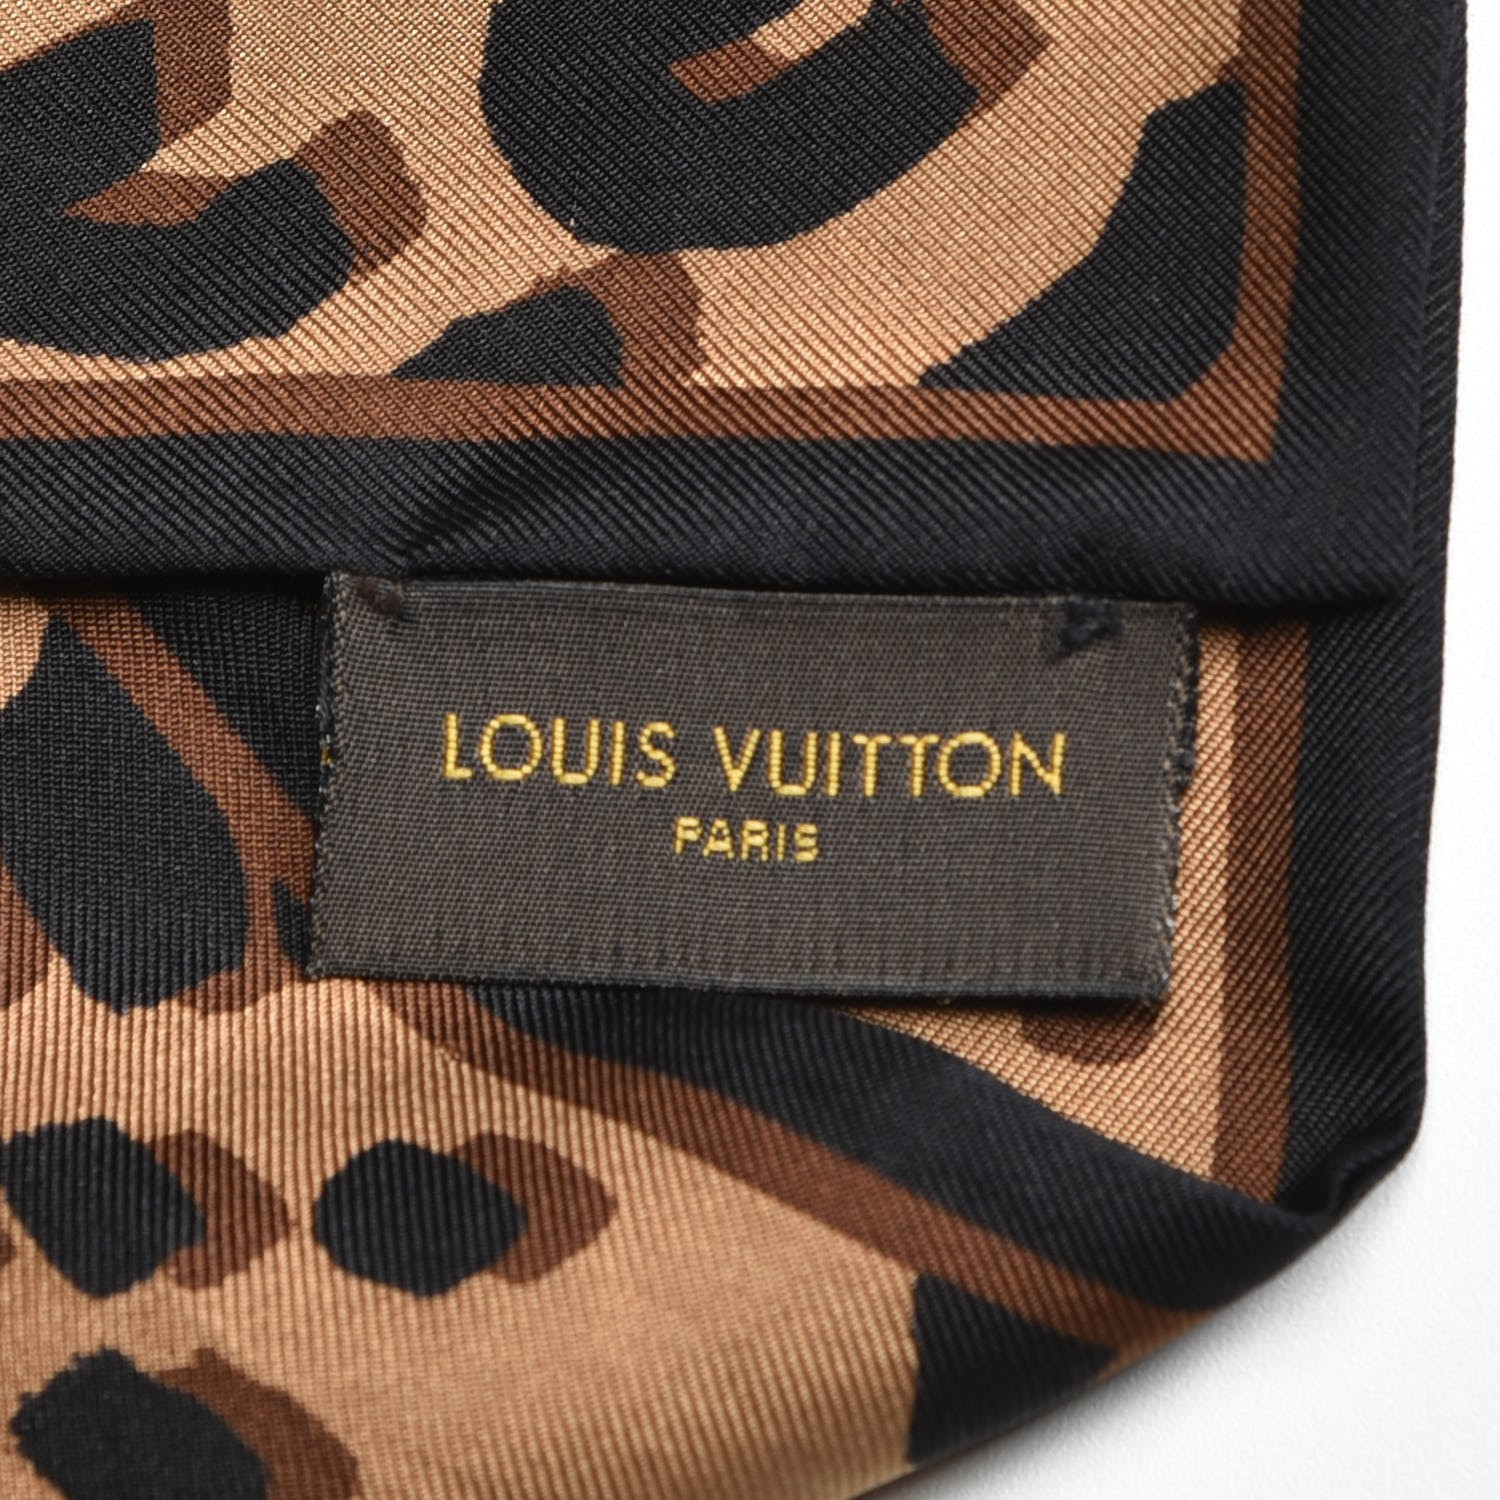 Authentic Louis Vuitton Stephen Sprouse Black Leopard Feels like